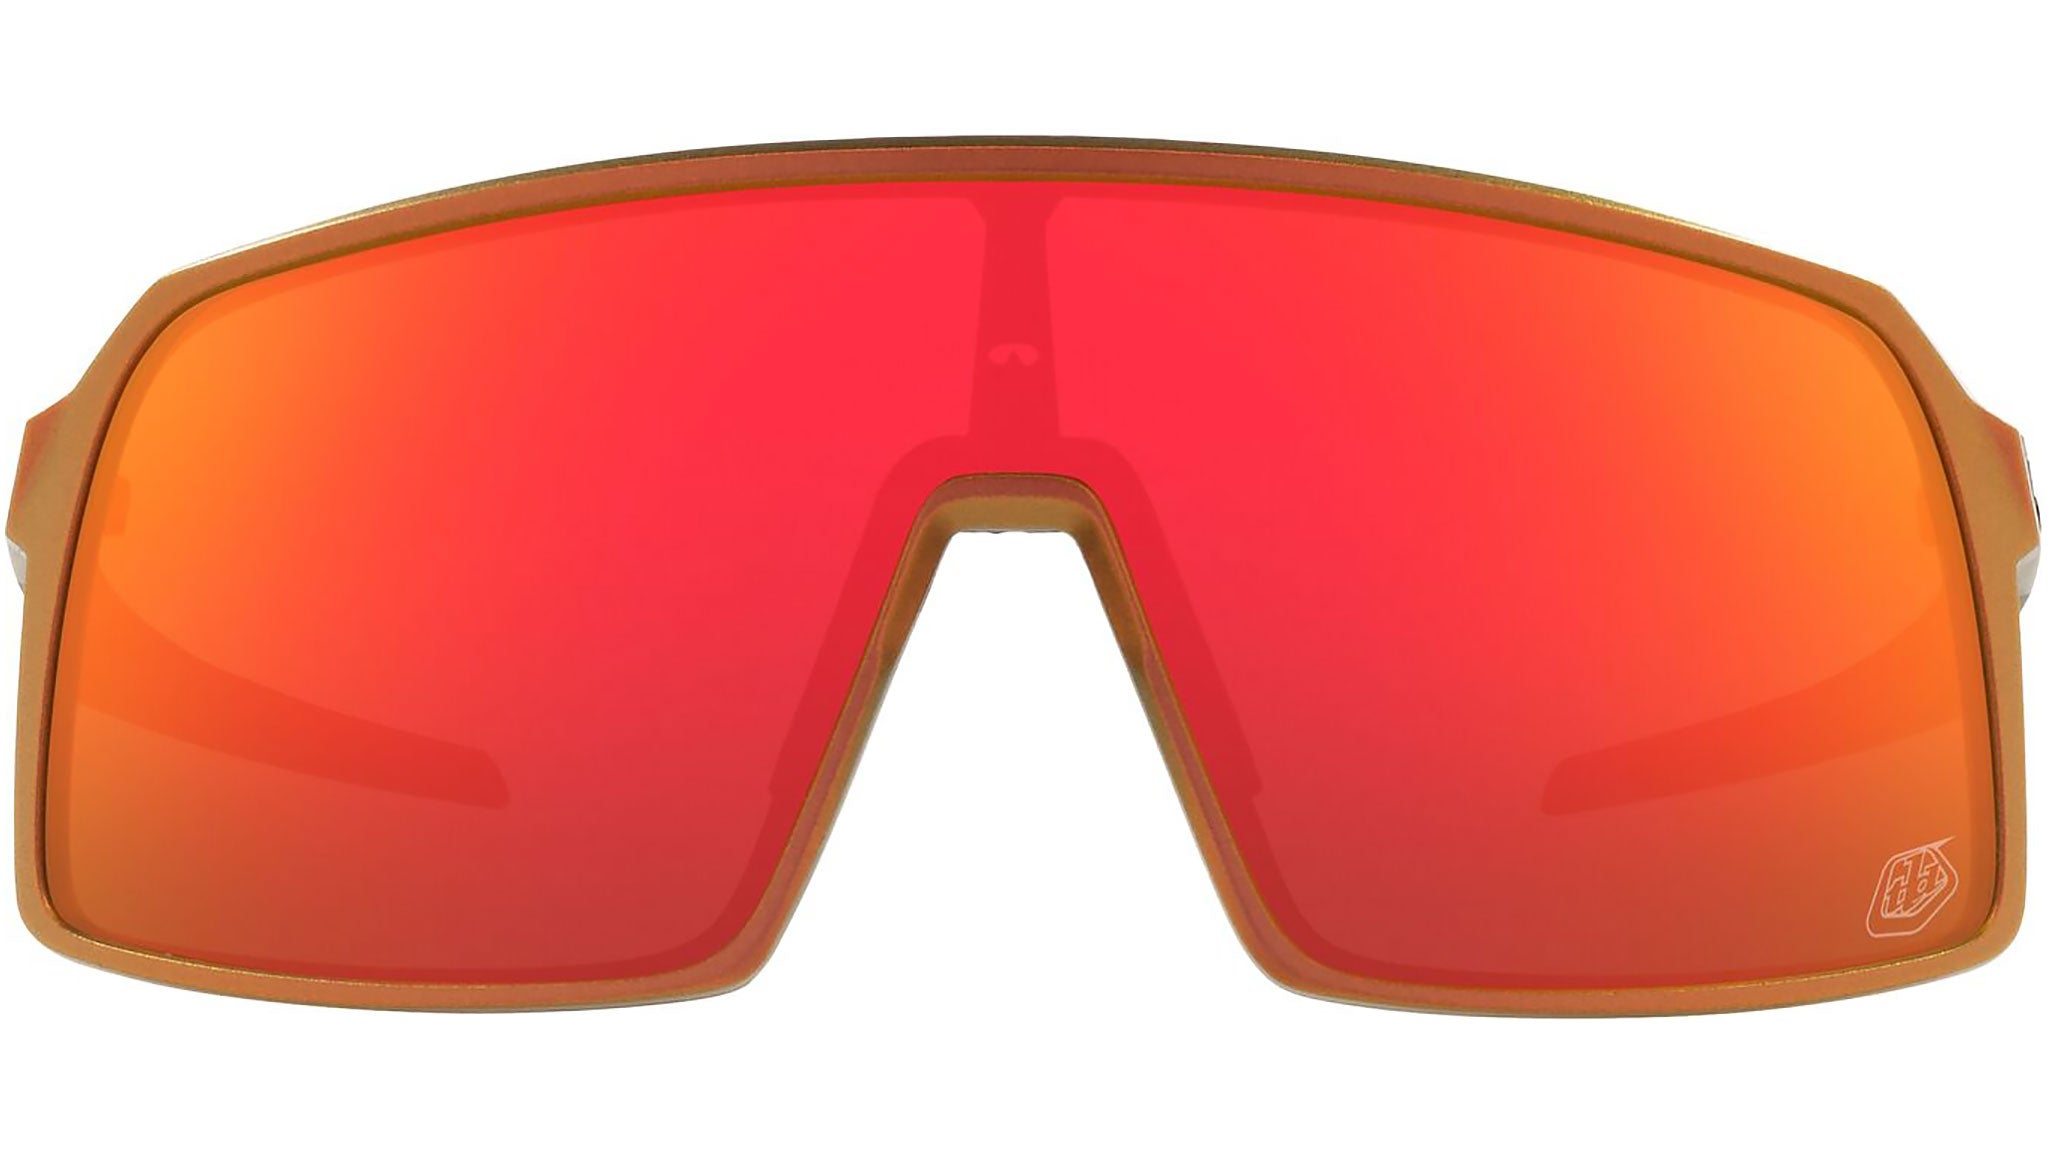 Buy Asian Fit Oakley Sunglasses | Vision Direct Australia